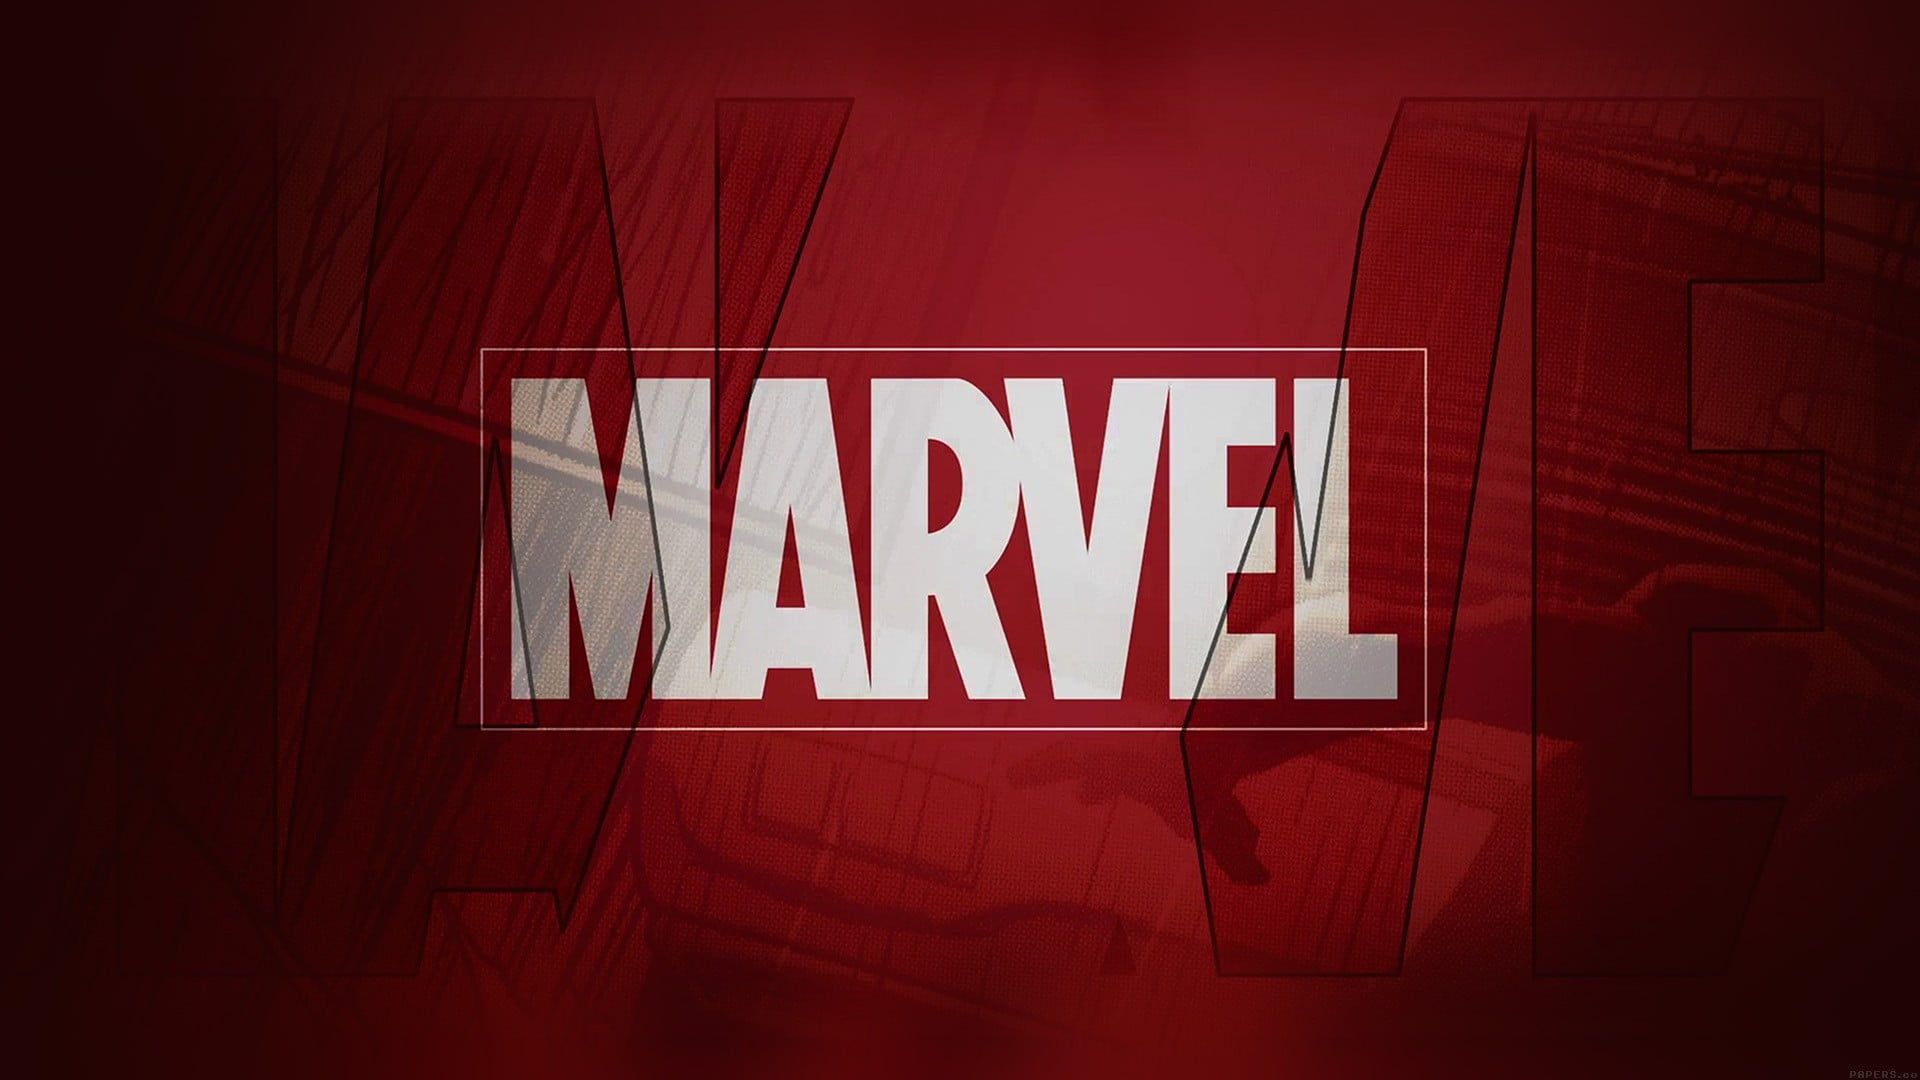 HD wallpaper: Marvel logo, Marvel Comics, typography, red, western script, text